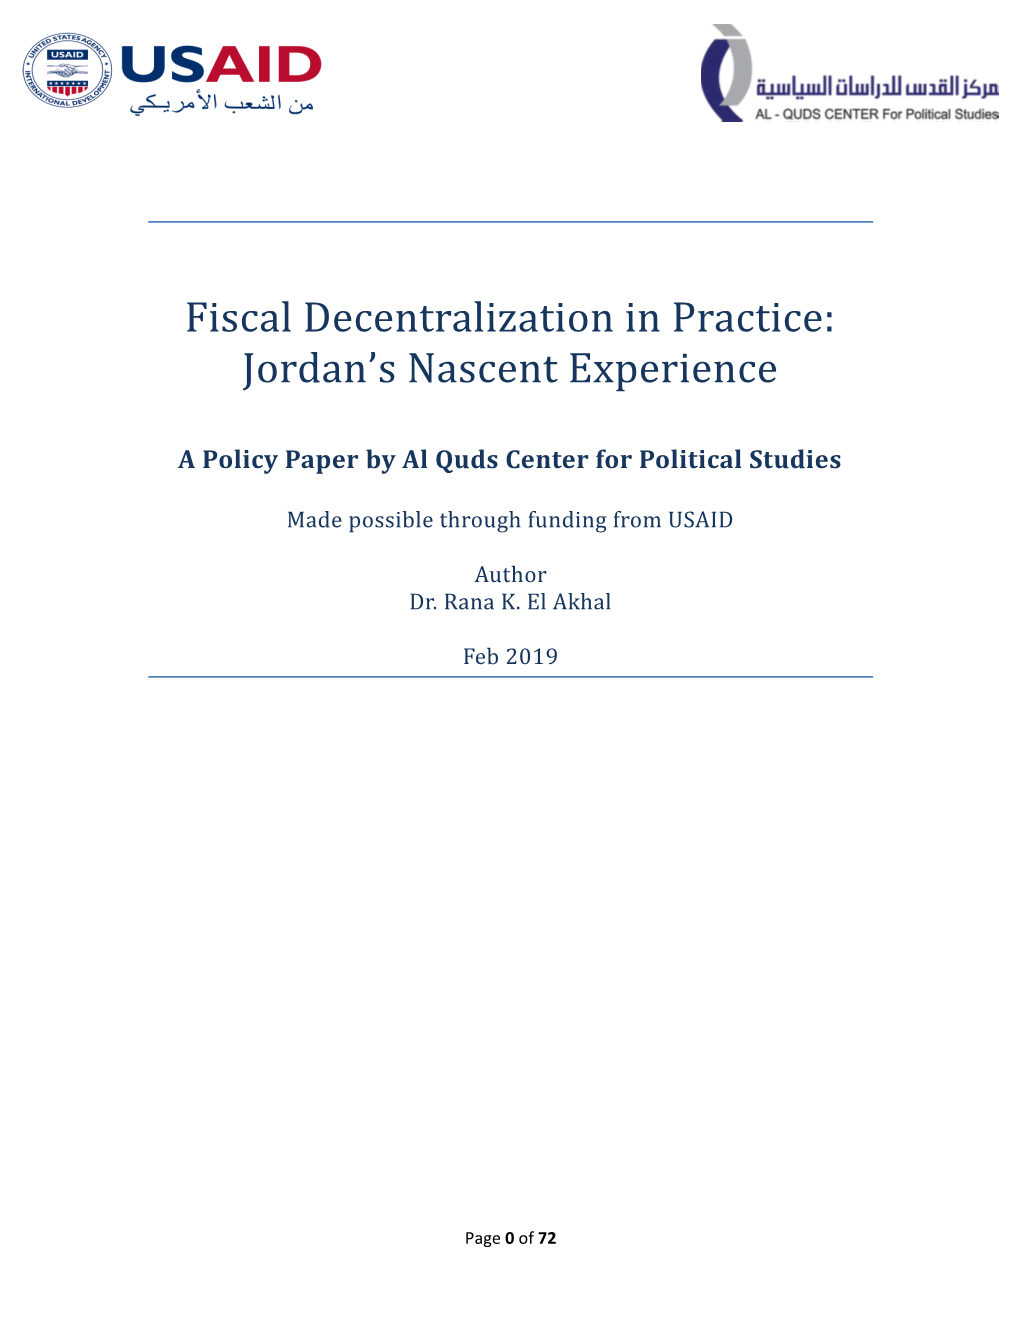 Fiscal Decentralization in Practice: Jordan's Nascent Experience